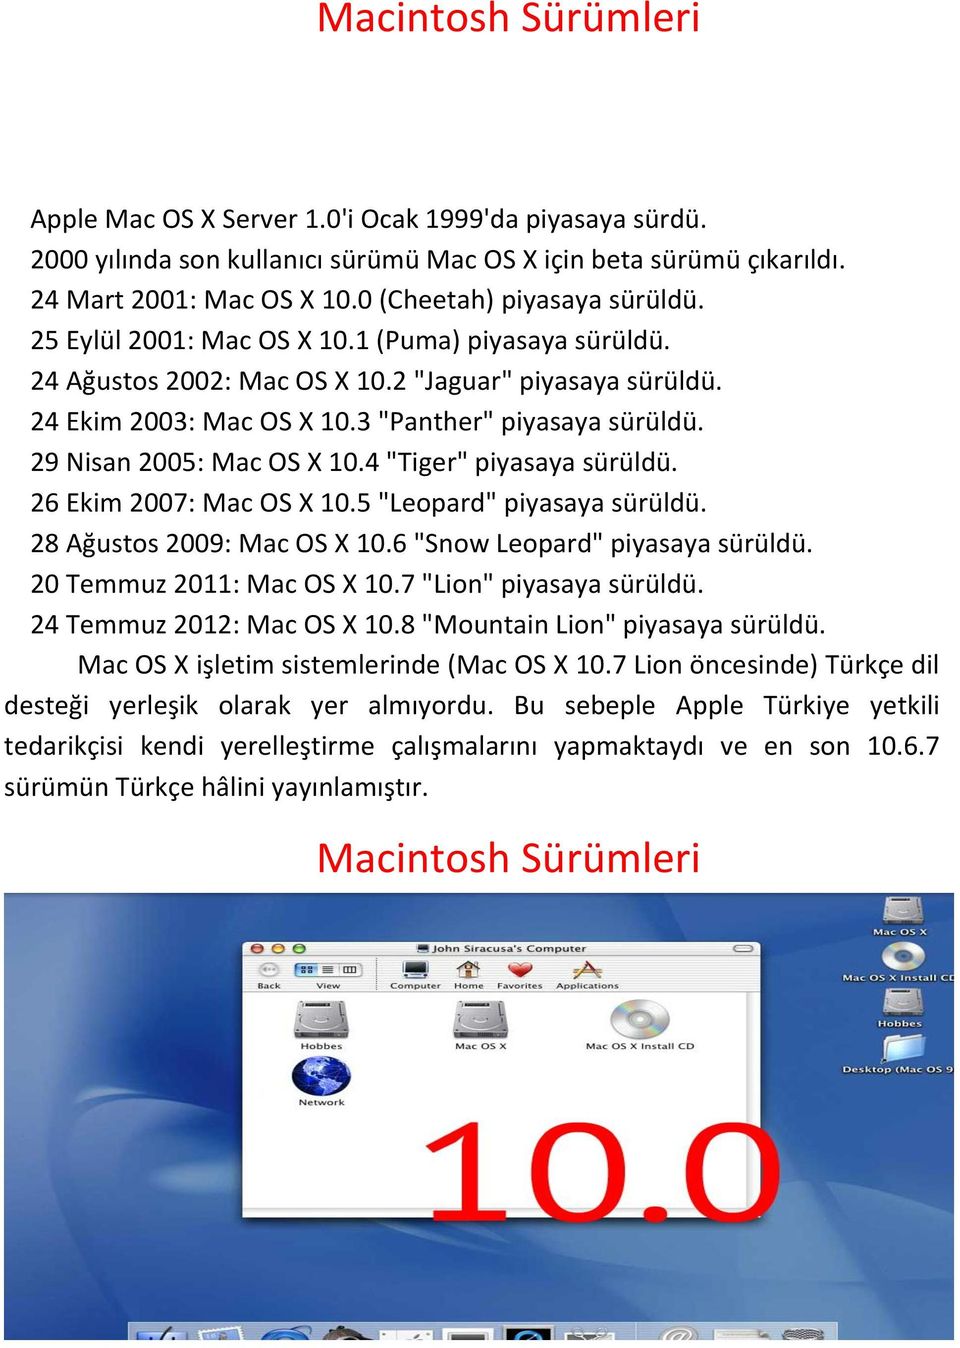 29 Nisan 2005: Mac OS X 10.4 "Tiger" piyasaya sürüldü. 26 Ekim 2007: Mac OS X 10.5 "Leopard" piyasaya sürüldü. 28 Ağustos 2009: Mac OS X 10.6 "Snow Leopard" piyasaya sürüldü.